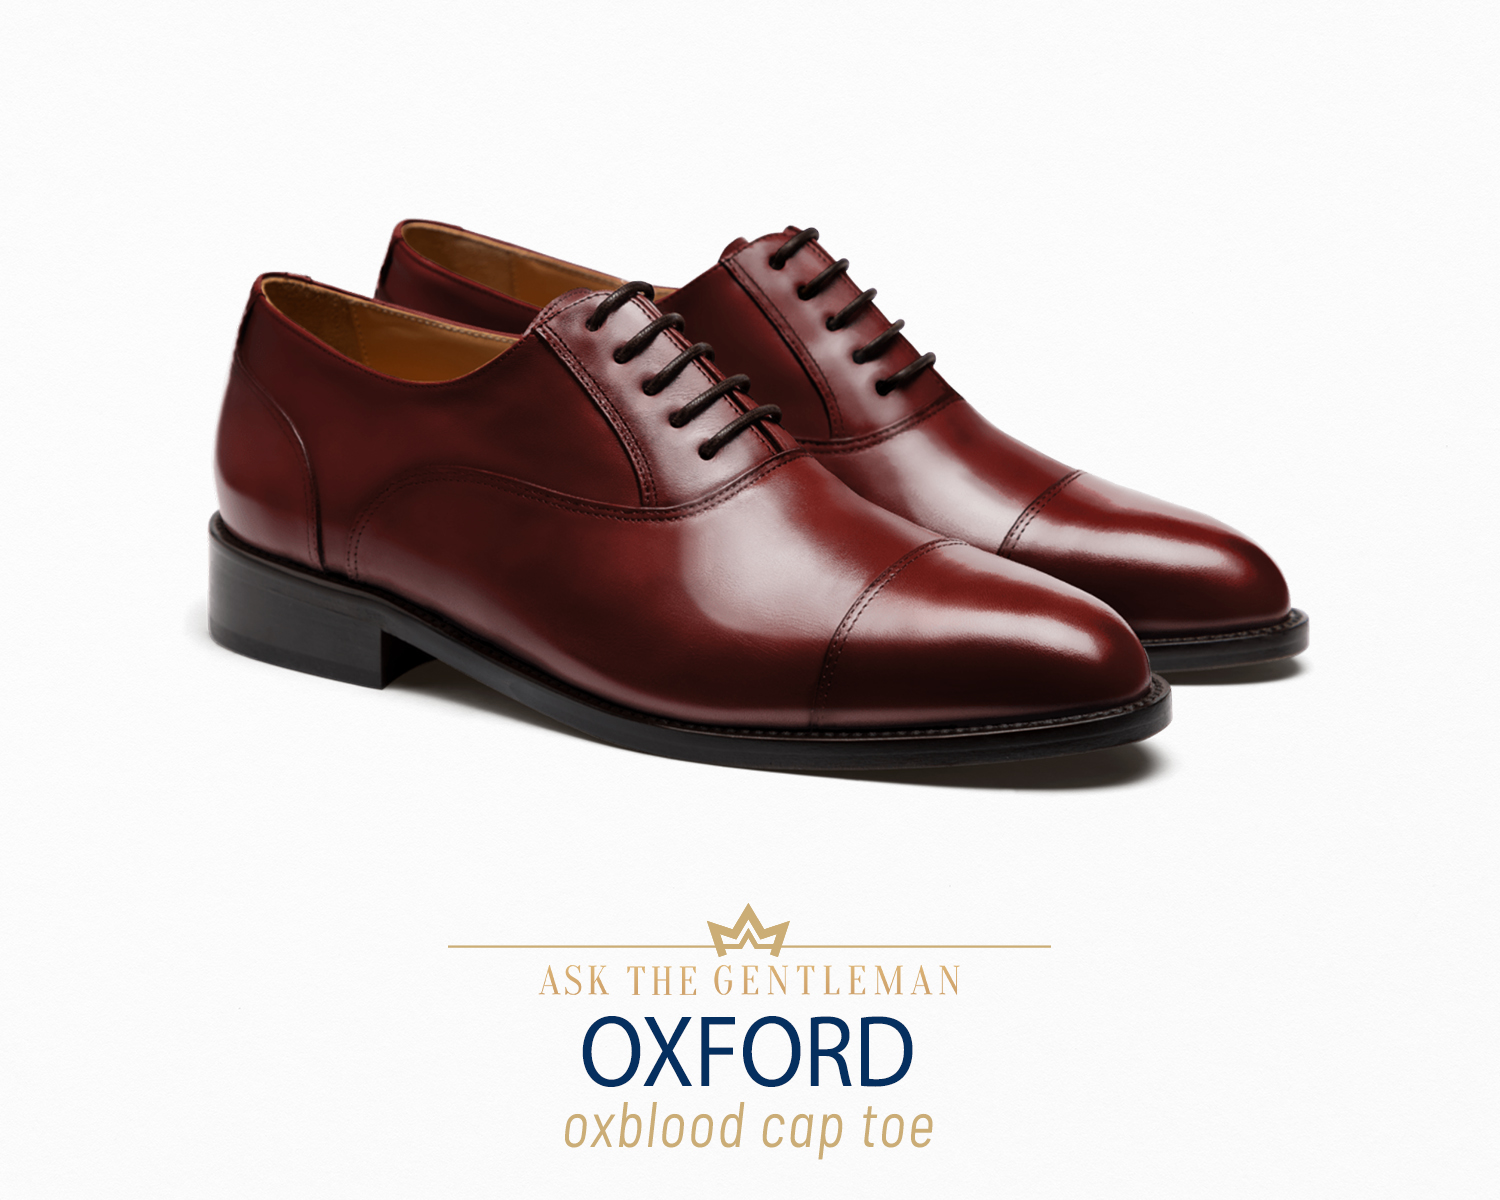 Oxblood cap-toe Oxford shoe